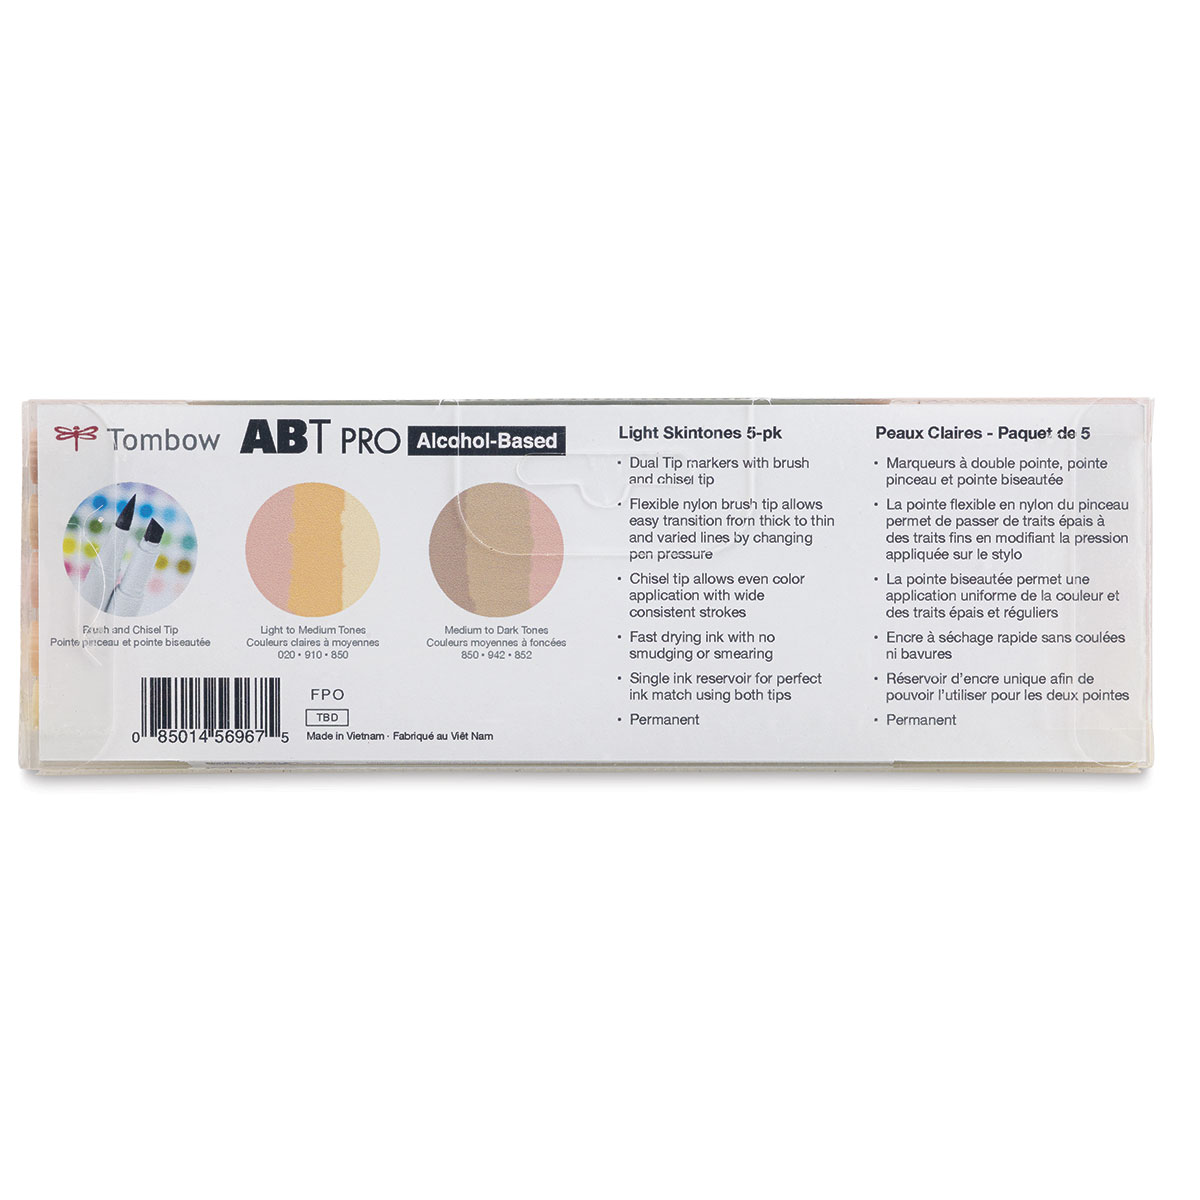 ABT PRO Alcohol-Based Art Markers, Purple Tones, 5-Pack